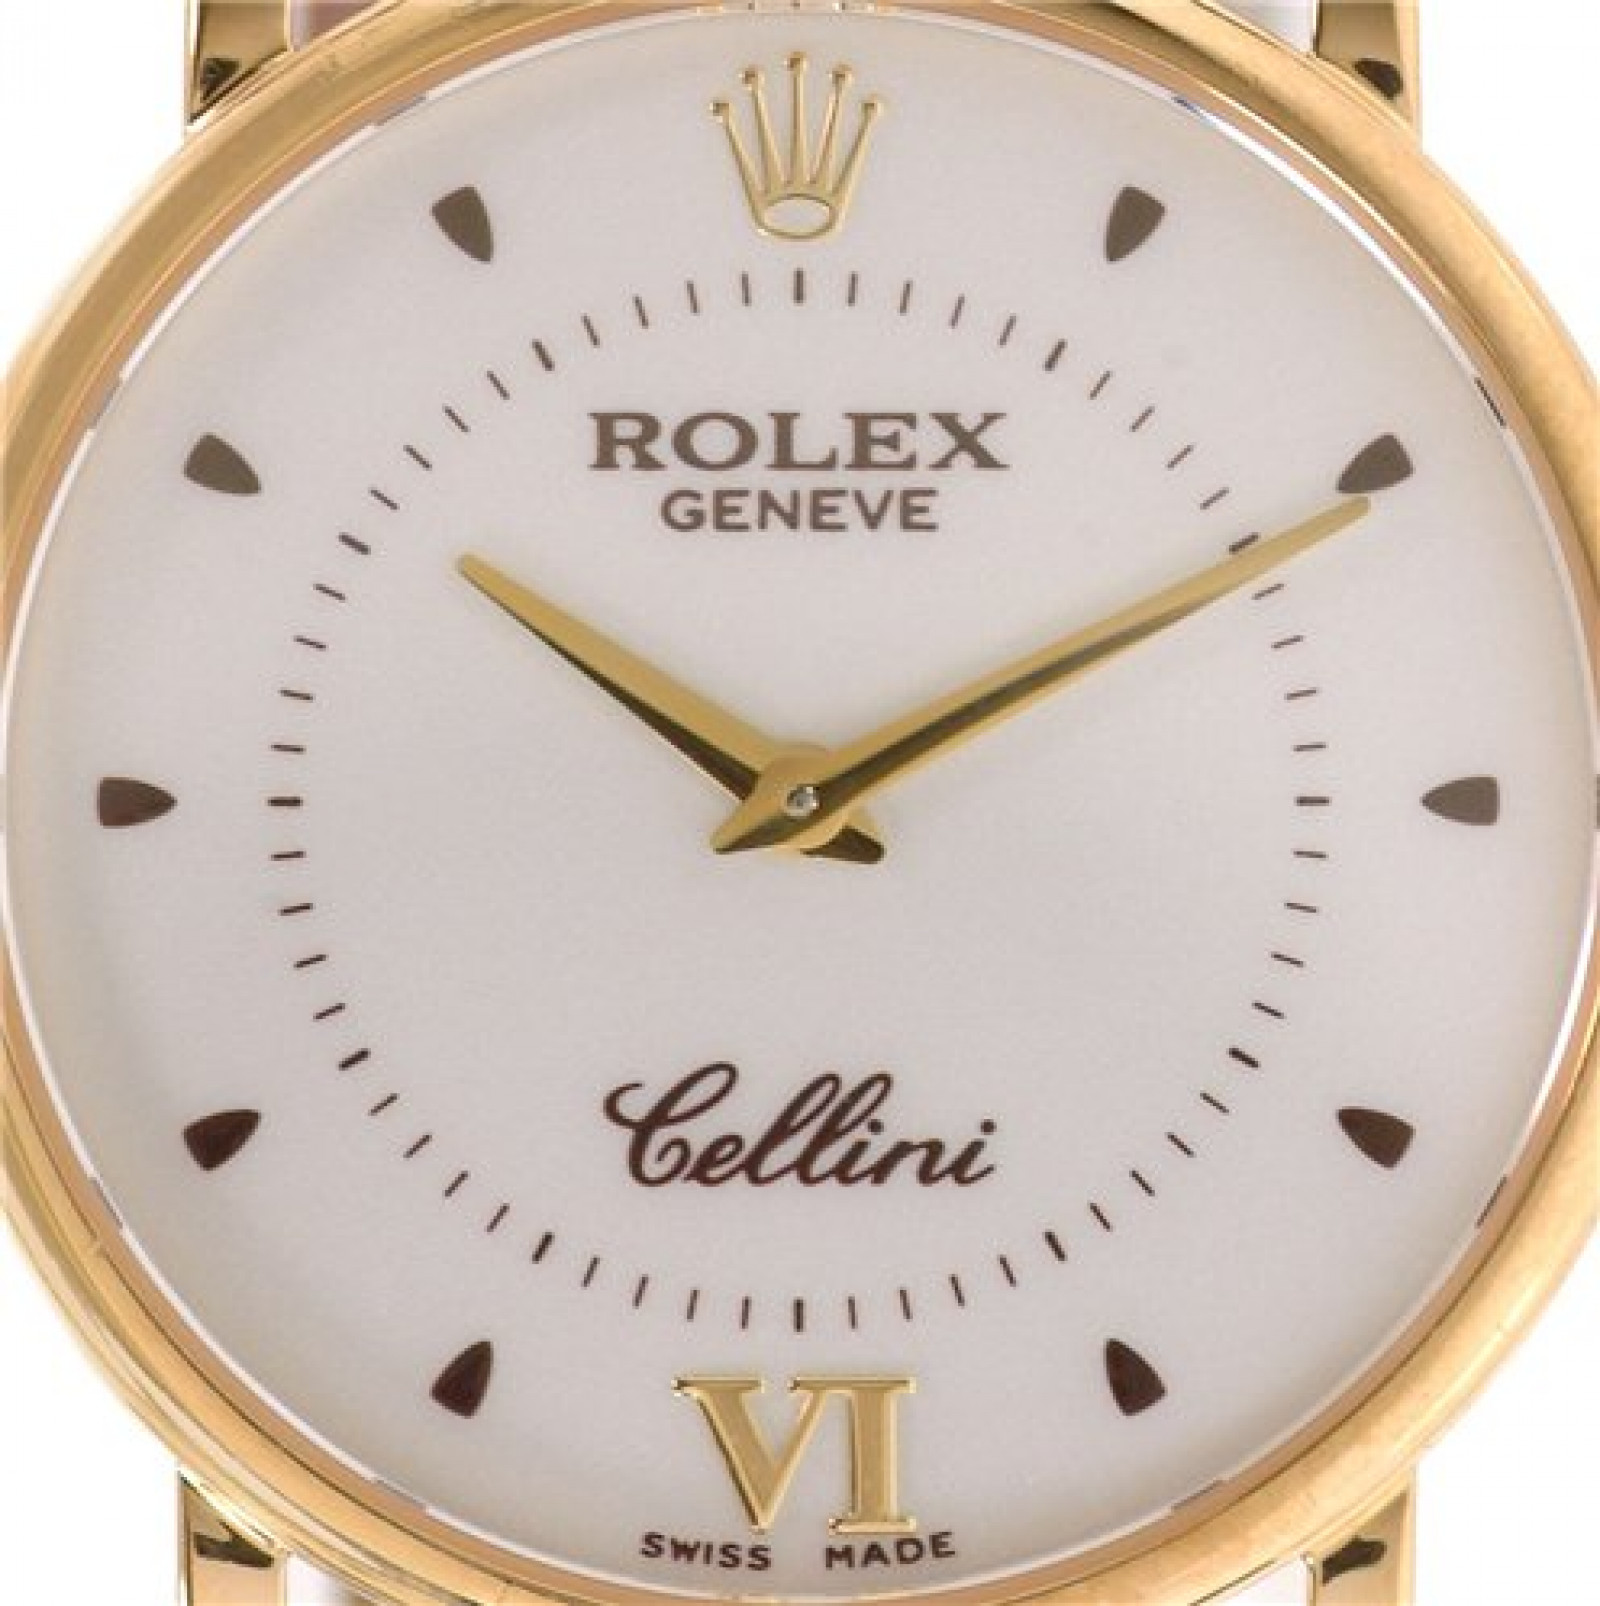 Rolex Cellini 5115 Gold Year 2001